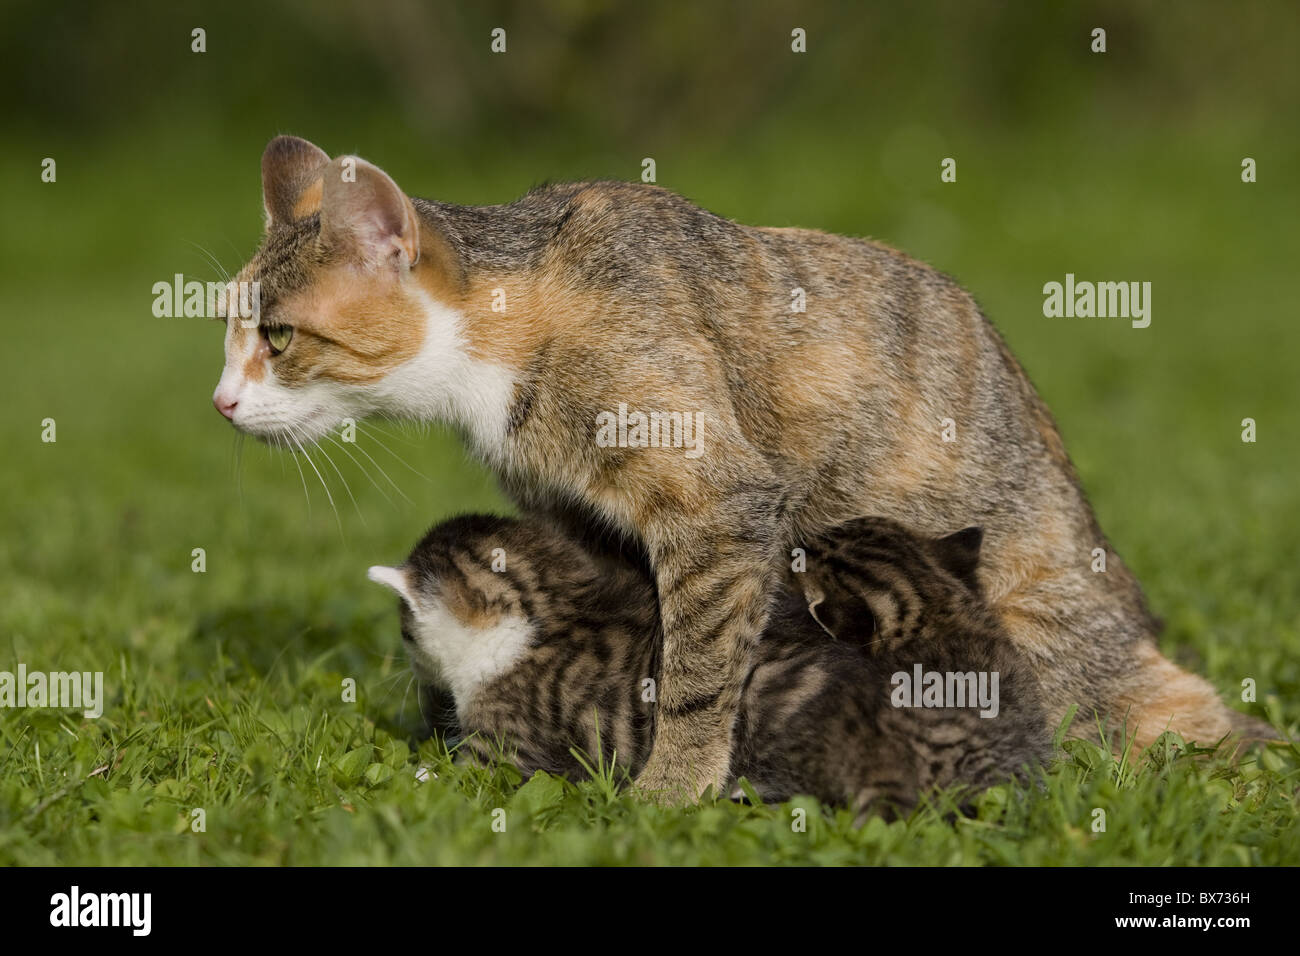 katze saeugt kaetzchen, cat nursing kitten Stock Photo